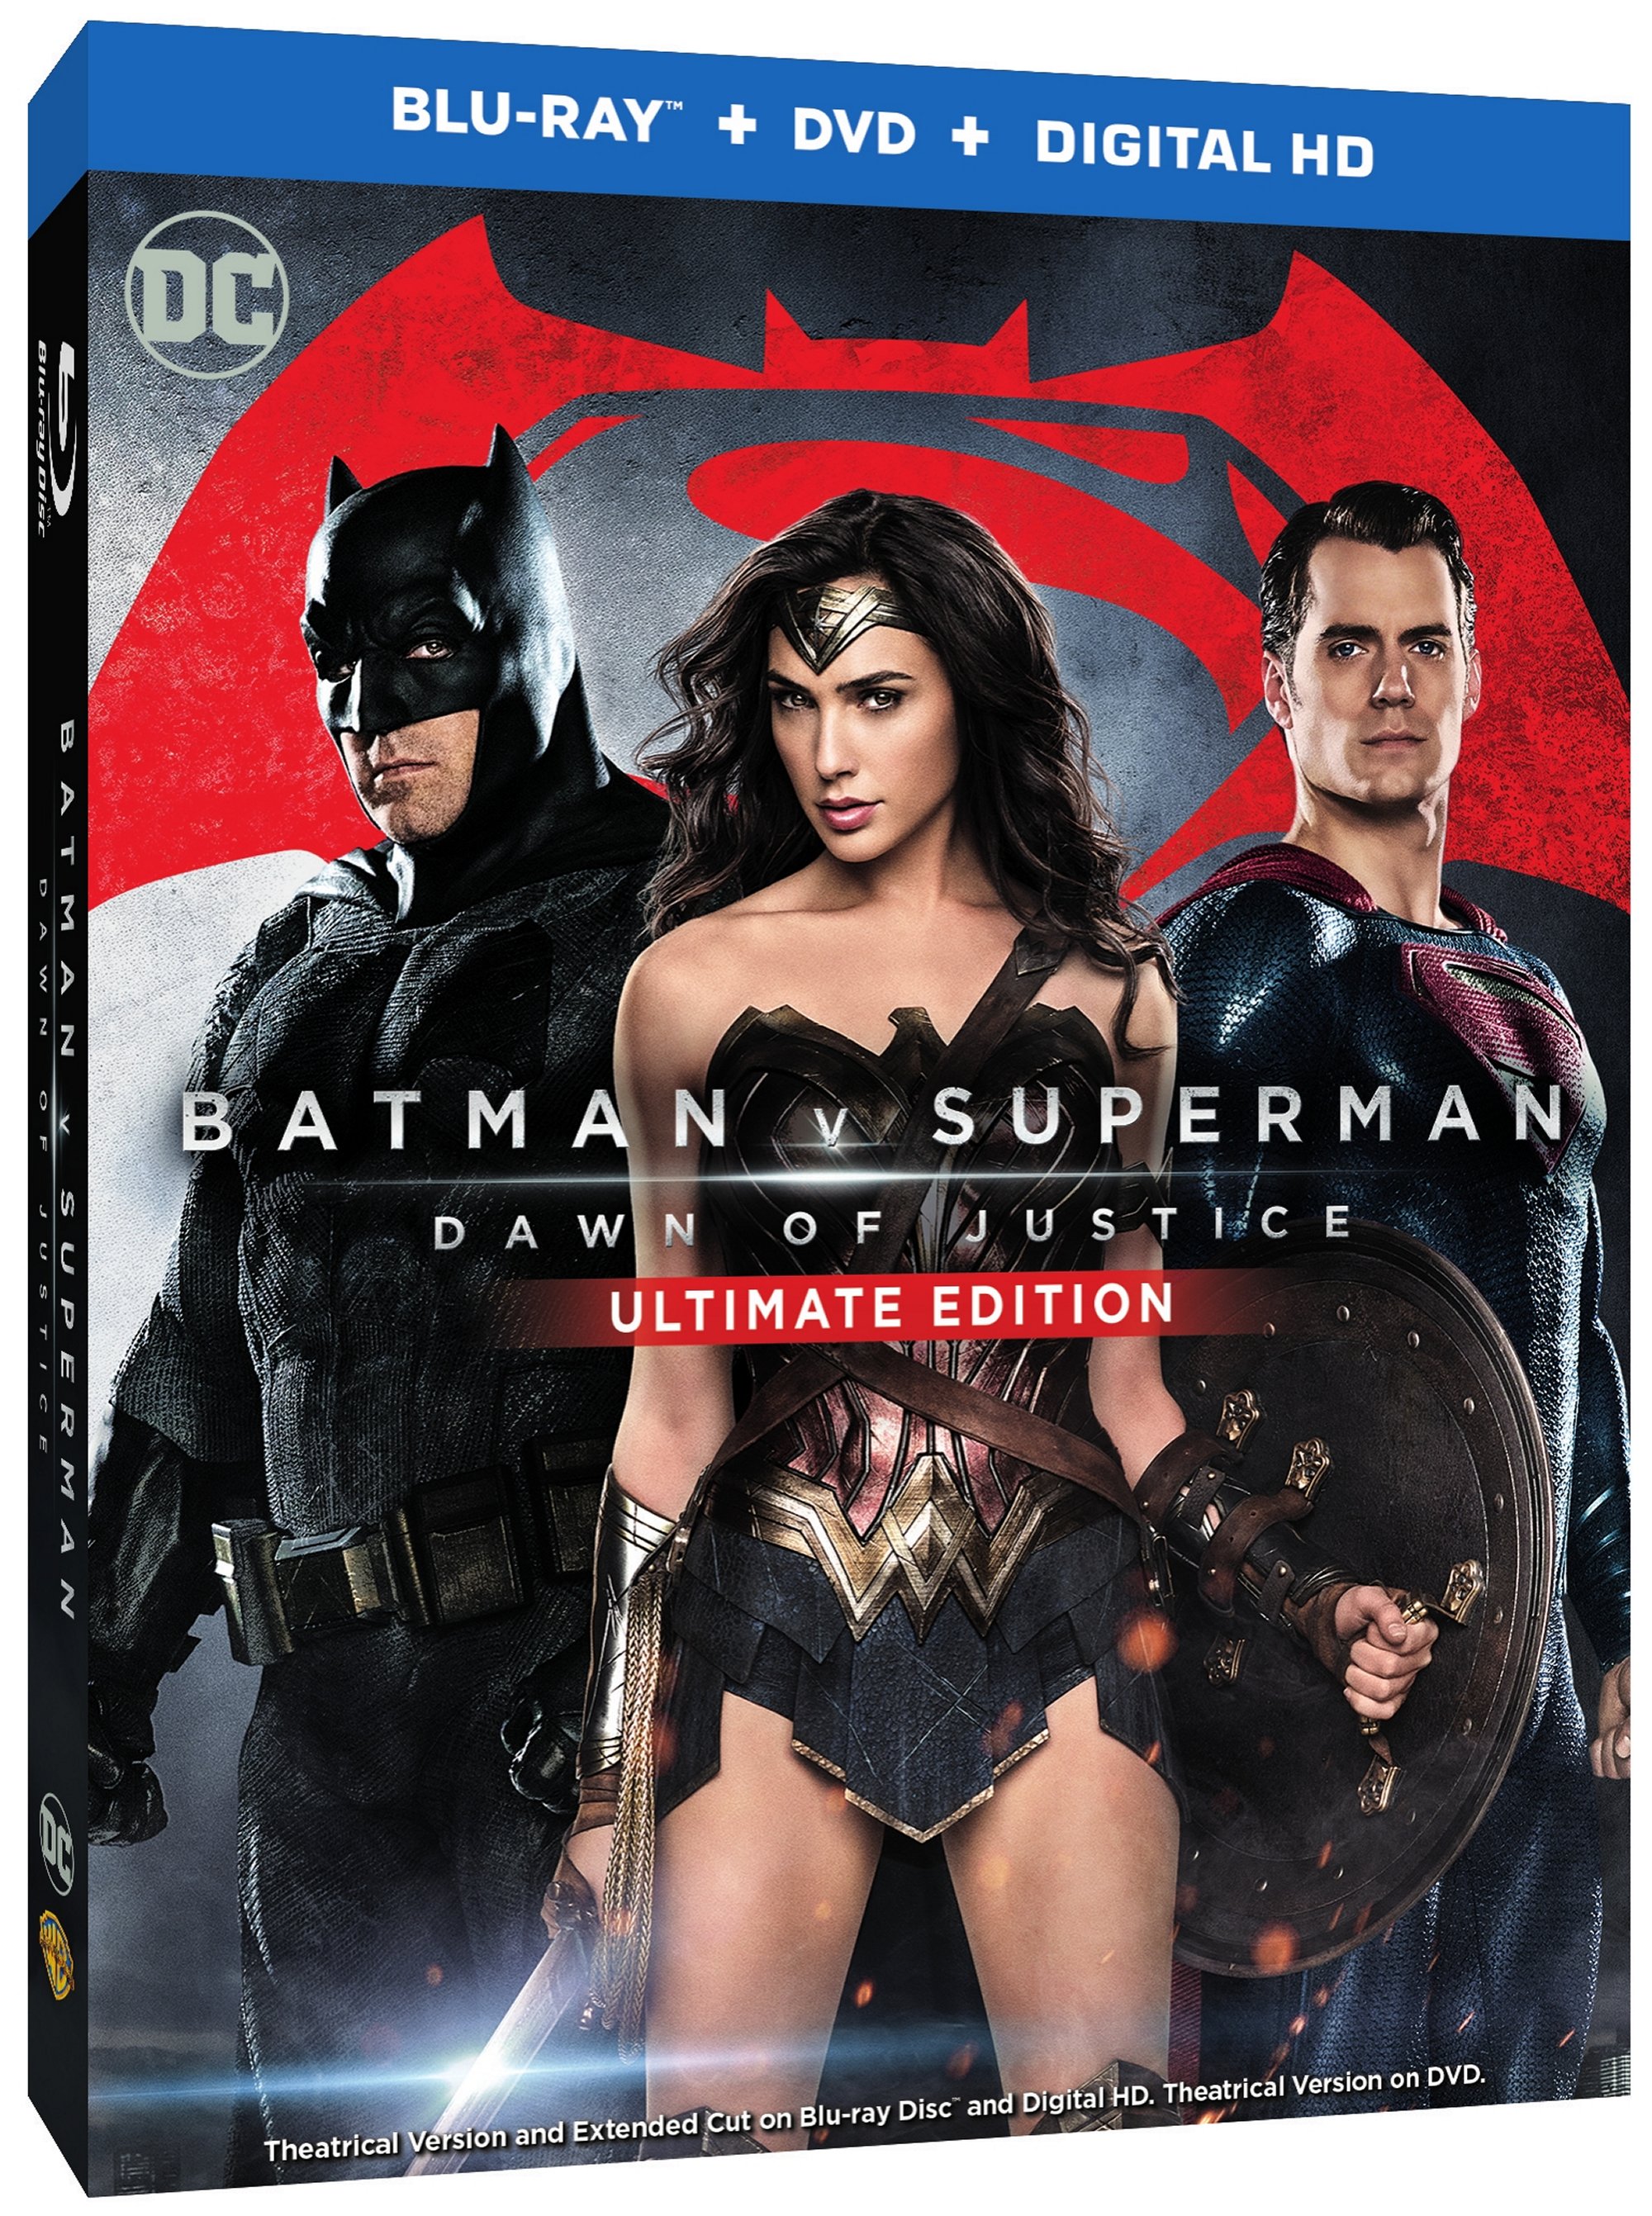 batman-v-superman-dawn-of-justice-blu-ray-cover_gs1c.jpg